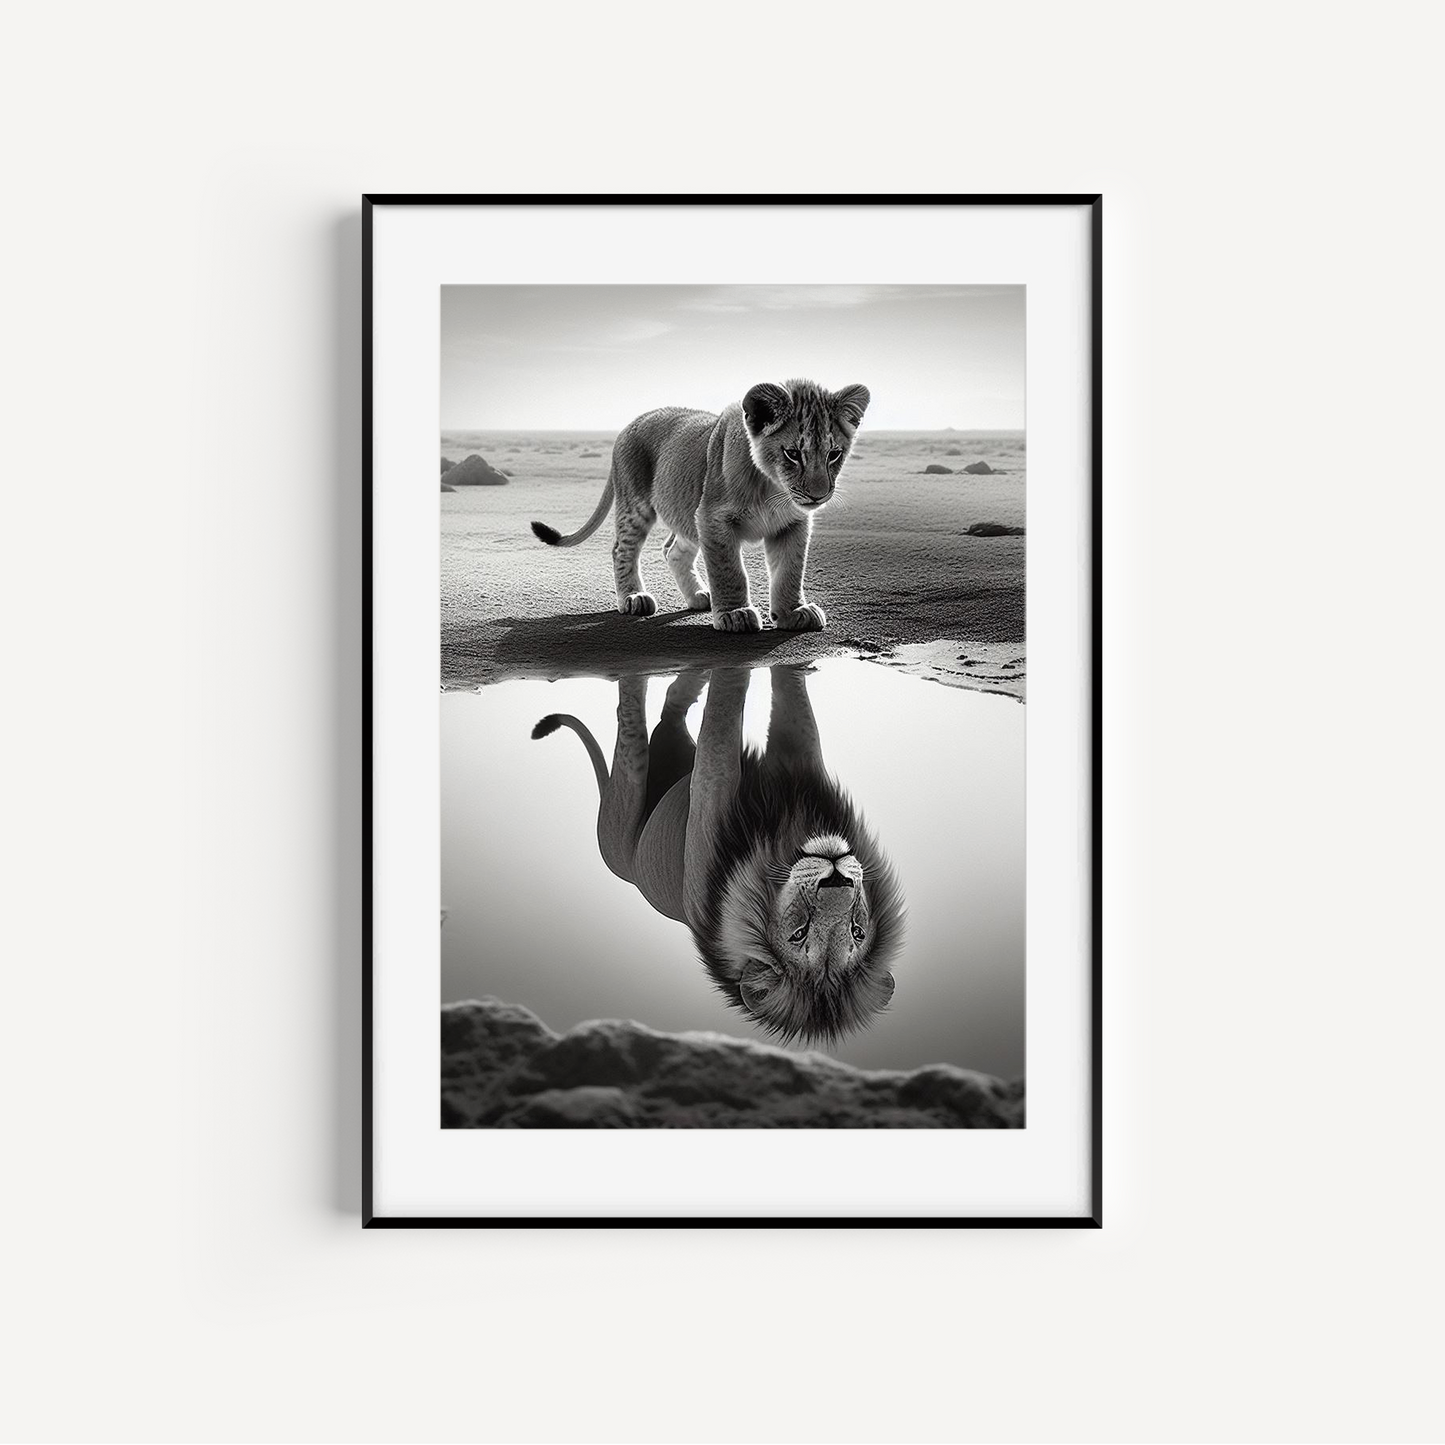 Black & White 'Mindset Is Everything' Lion Cub Reflection Print